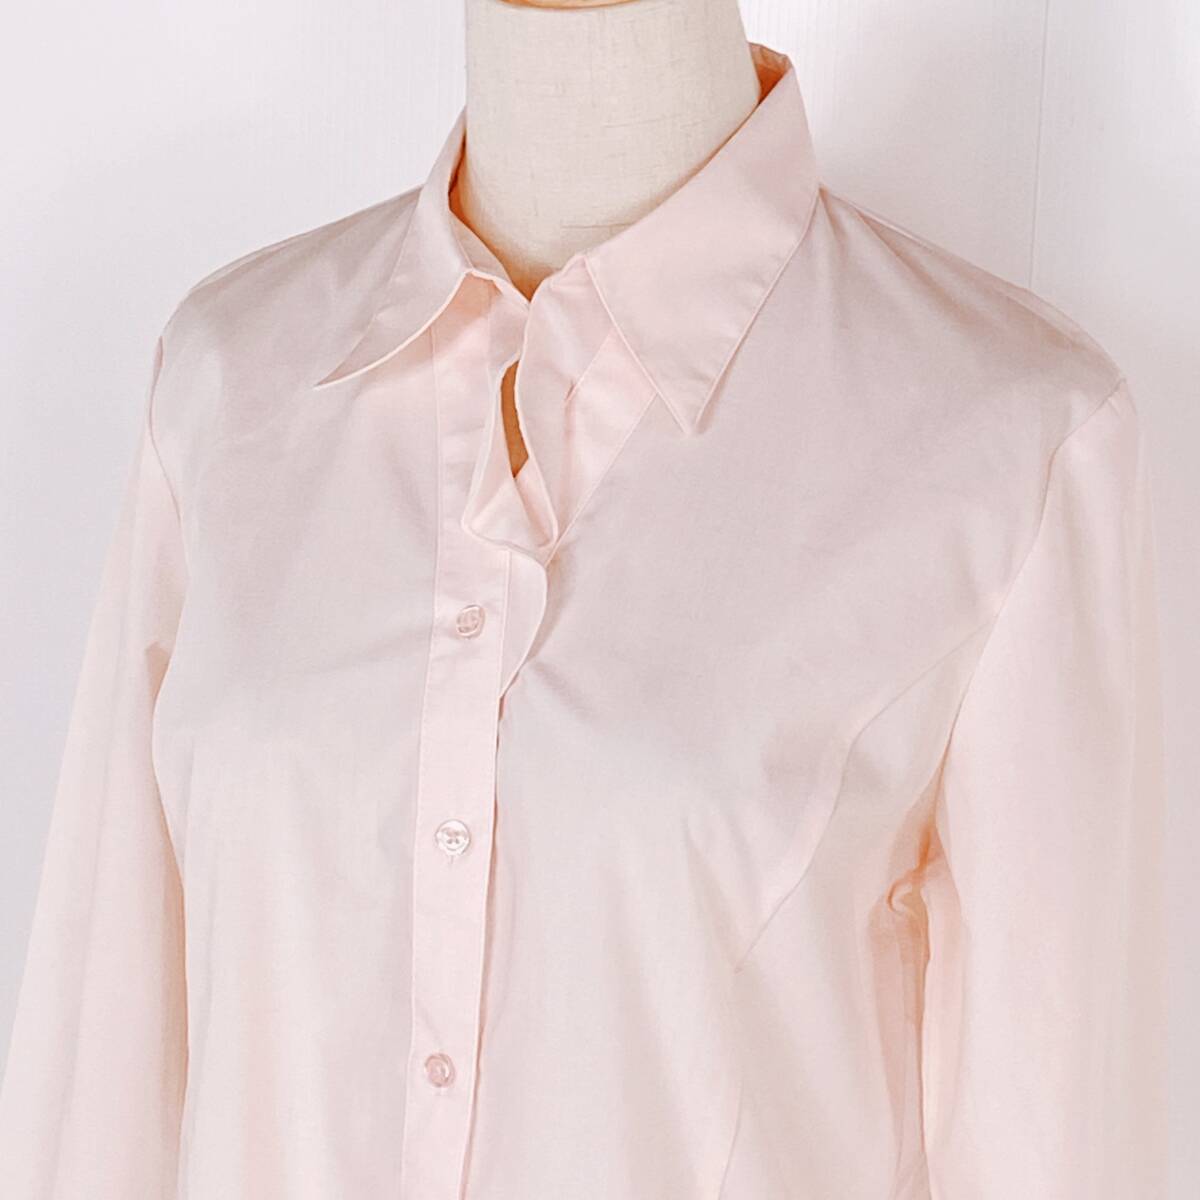 Z1186 美品 レディース 長袖 ワイシャツ ブラウス ライトピンク Lサイズ 万能 オフィススタイル スーツインナー かわいい シンプル USED_画像5